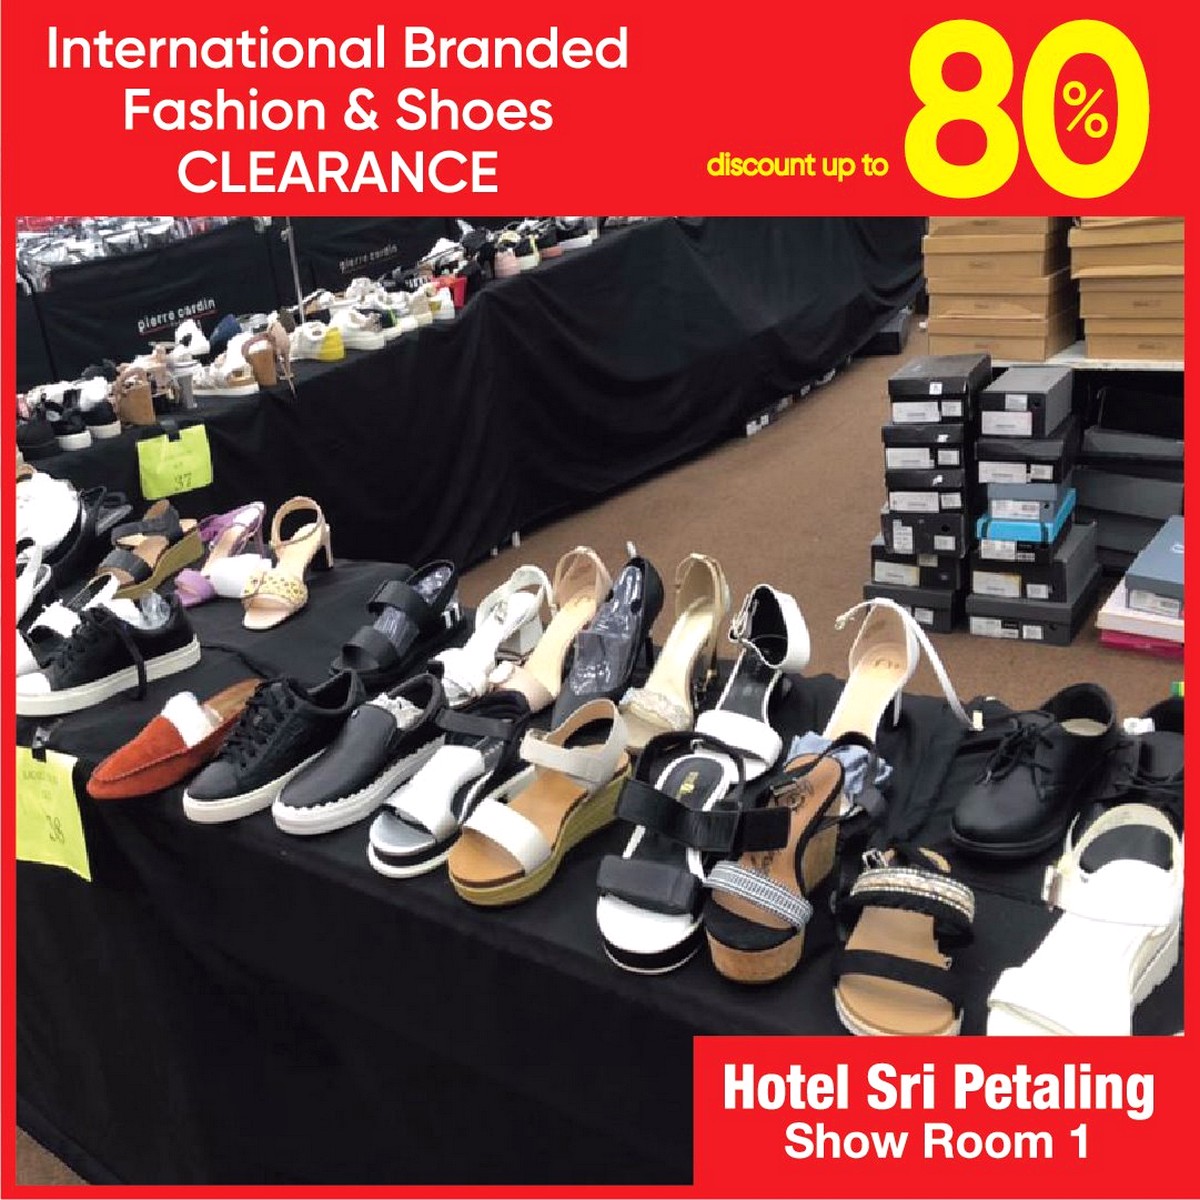 Hotel-Sri-Petaling-Warehouse-Sale-2021-6 - Apparels Fashion Accessories Fashion Lifestyle & Department Store Kuala Lumpur Selangor Warehouse Sale & Clearance in Malaysia 